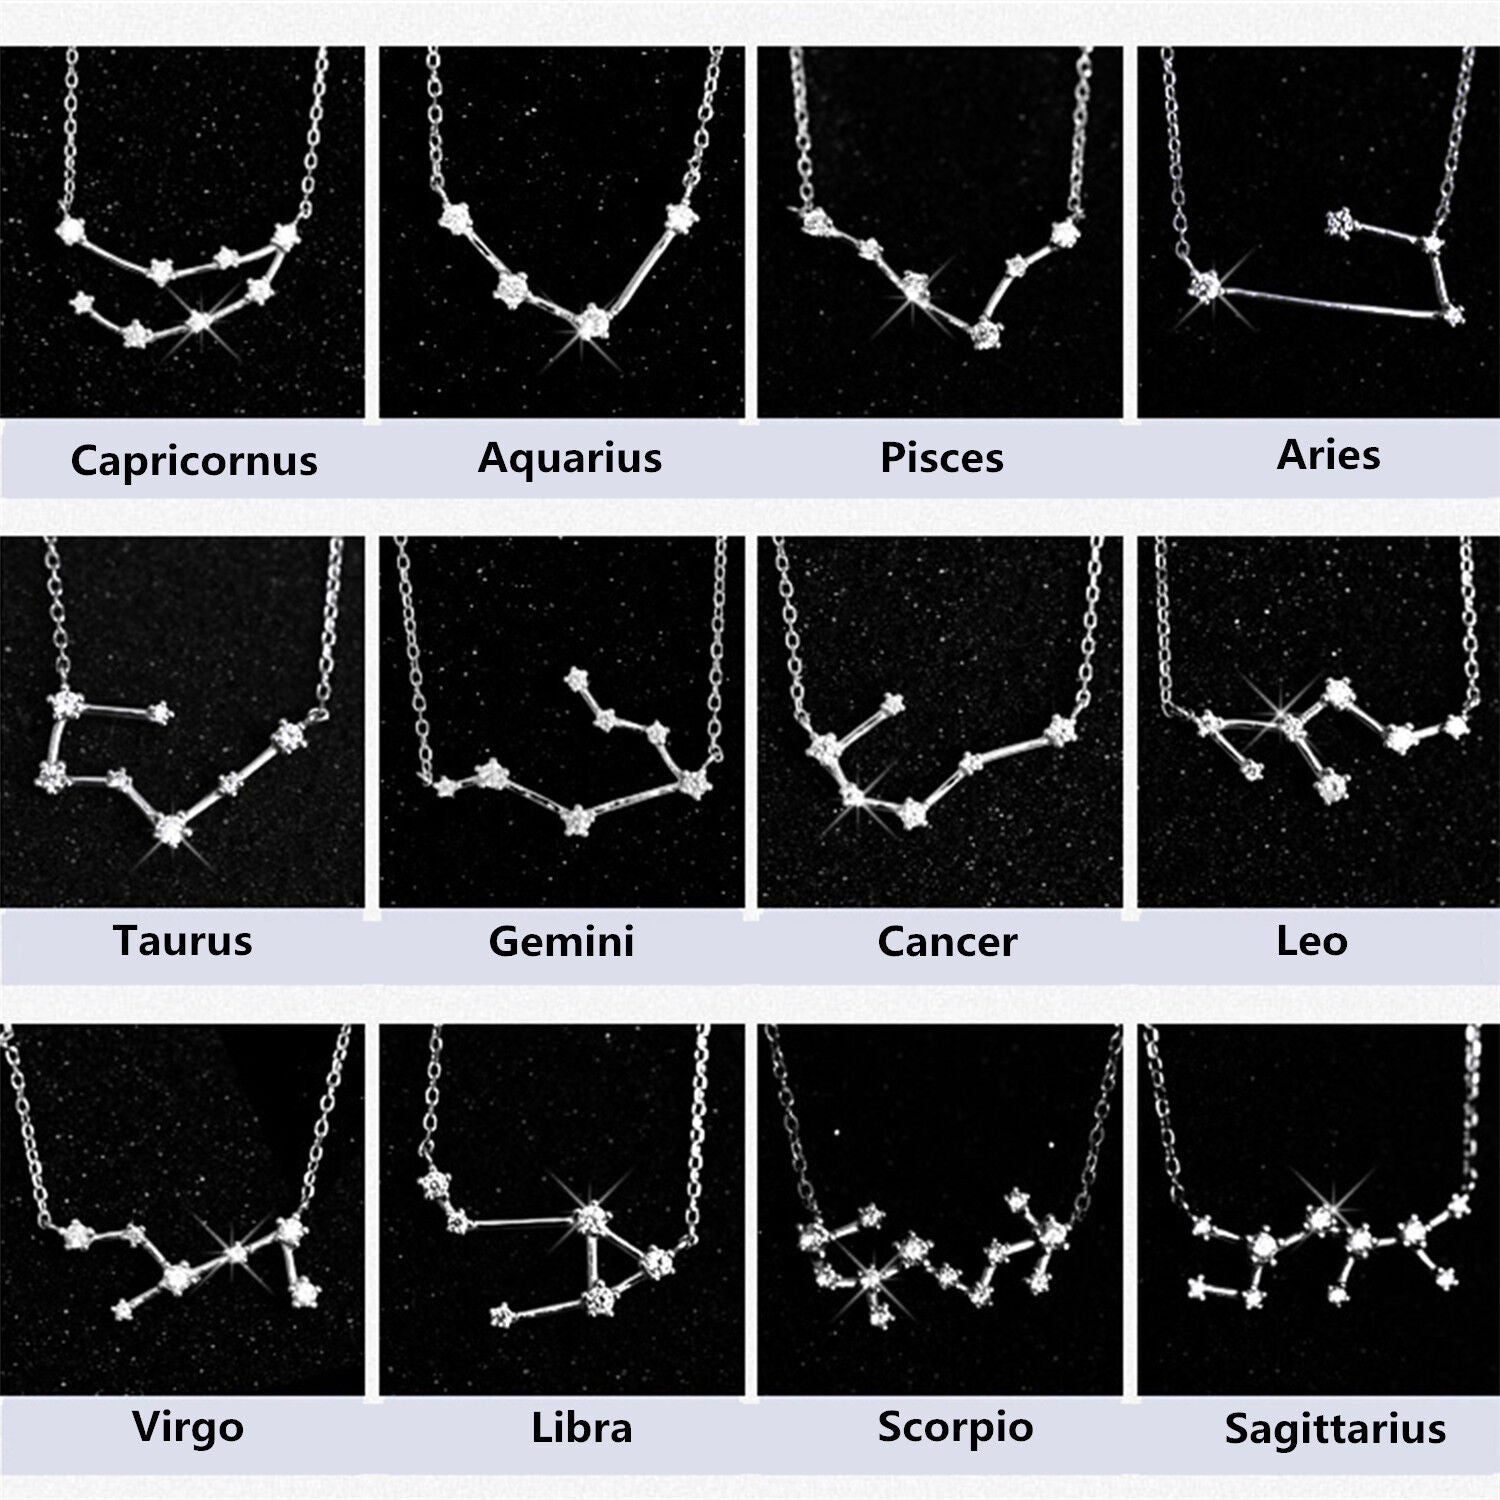 Silver Horoscope Astrology Zodiac Birth Sign Chain Necklace - luxoz